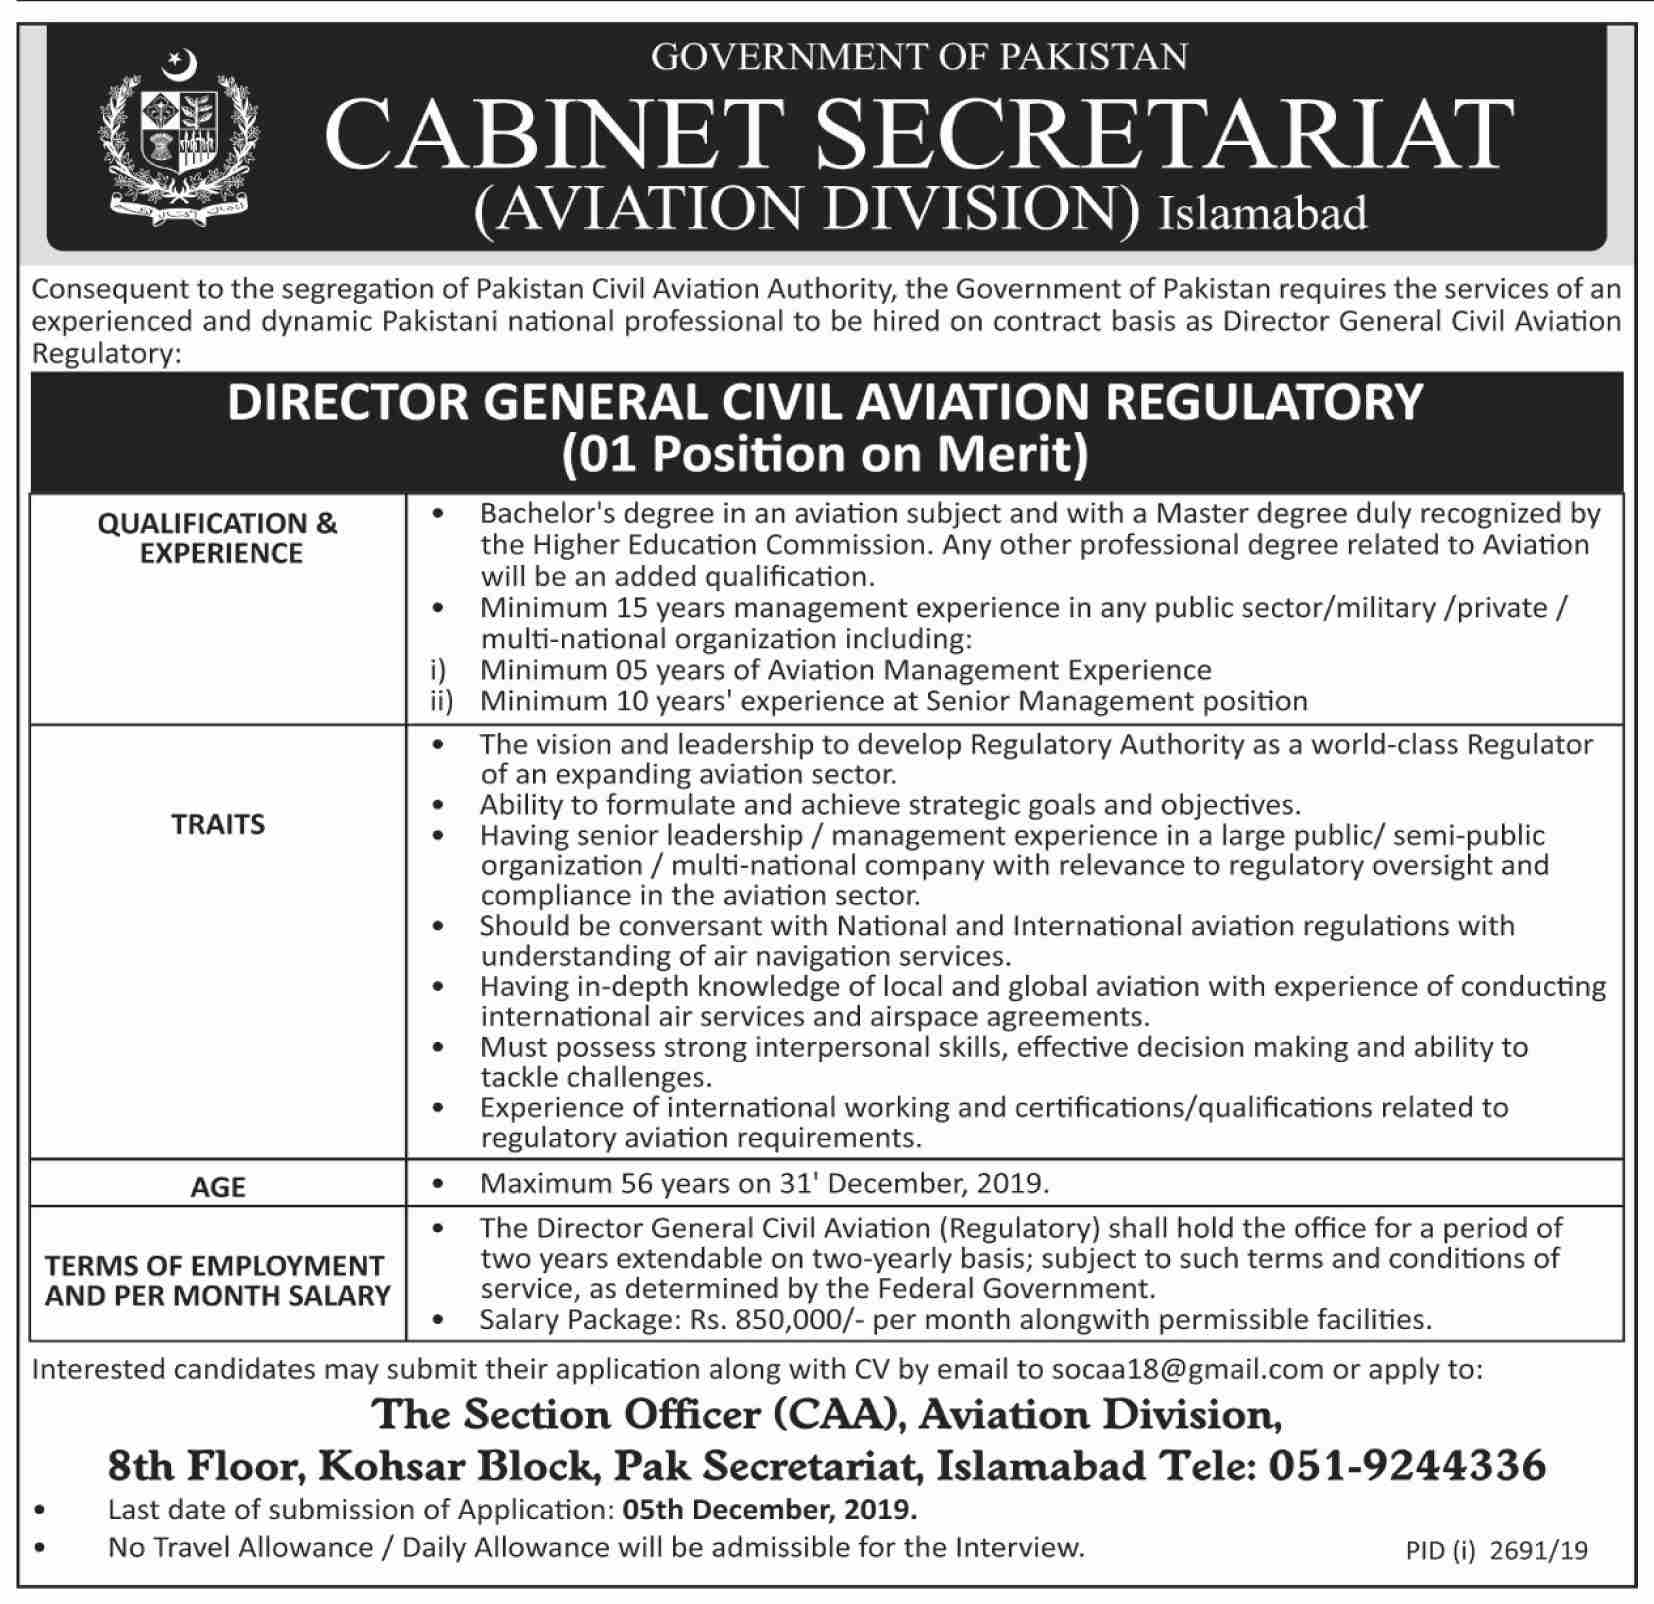 Director General Civil Aviation Regulatory Jobs In Aviation Division Islamabad